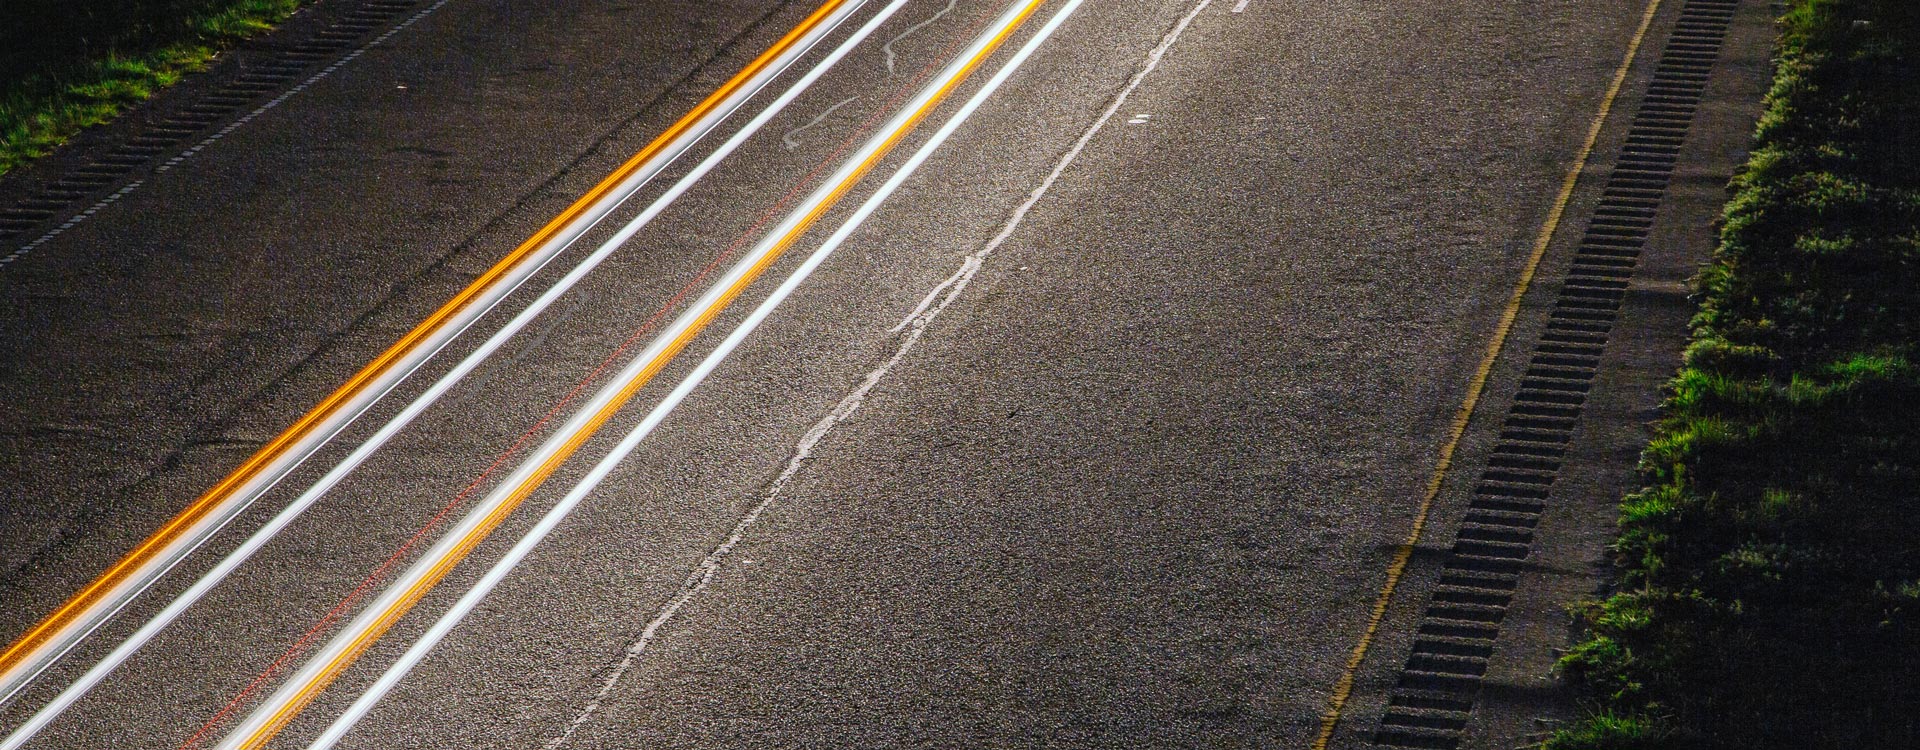 Tramo de una carretera iluminada